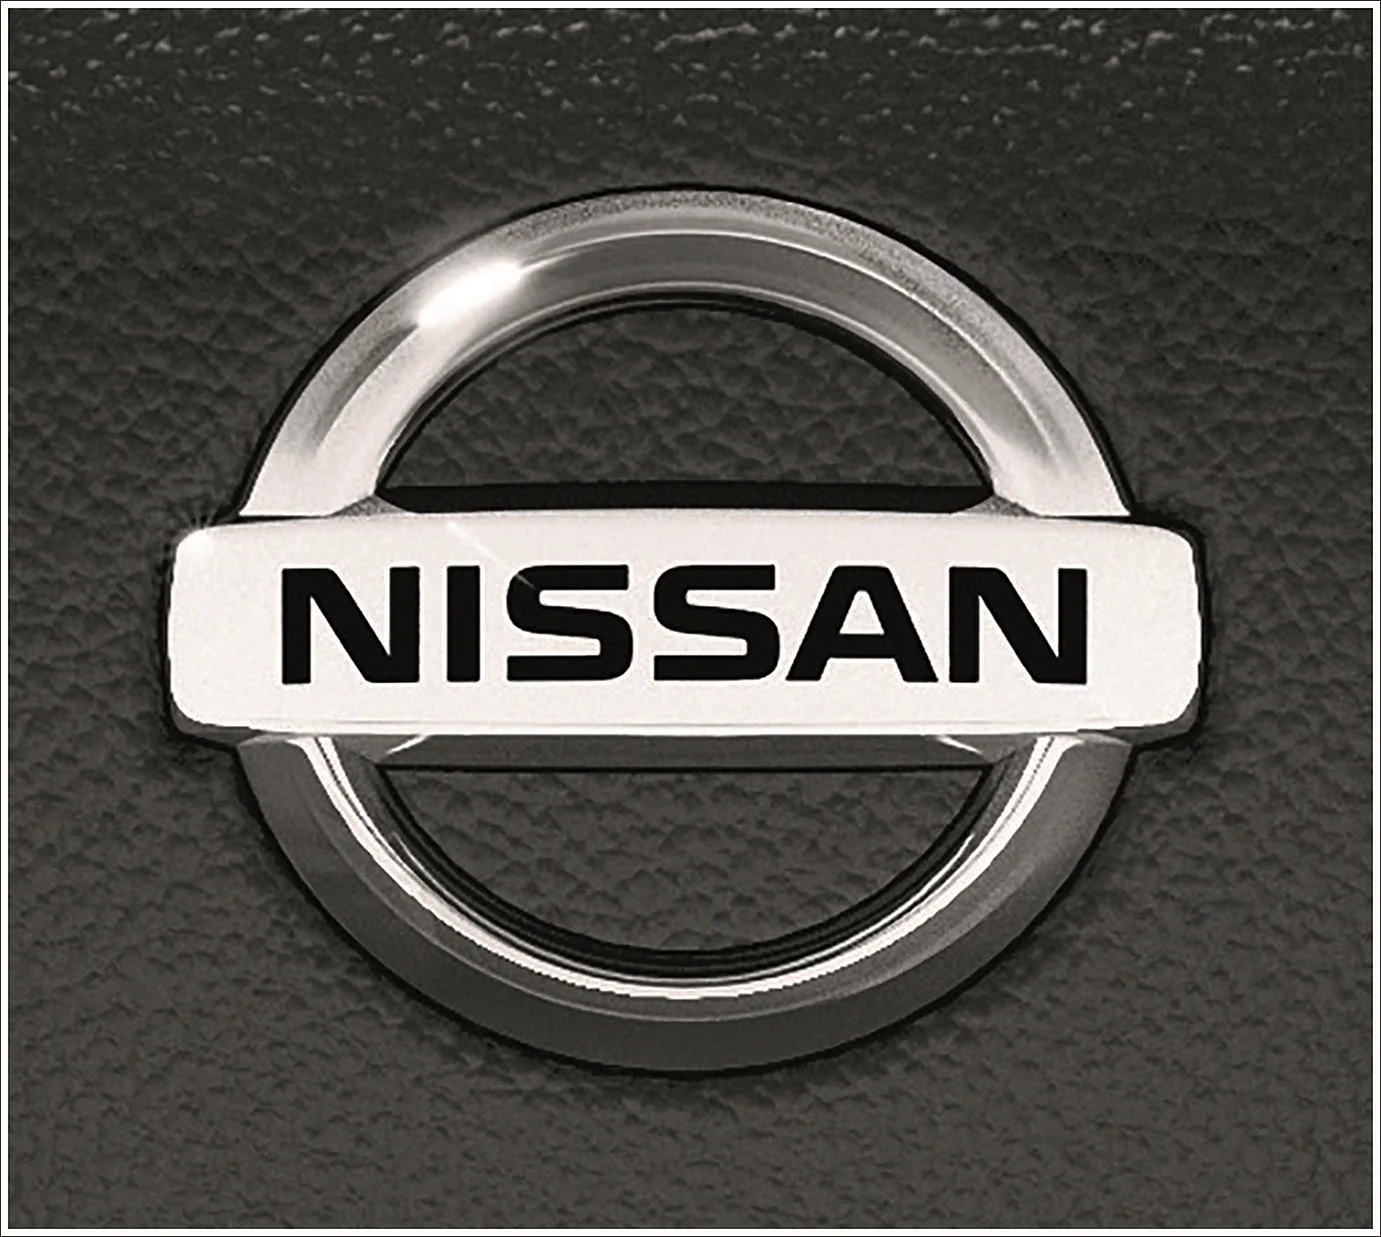 Nissan Motor logo